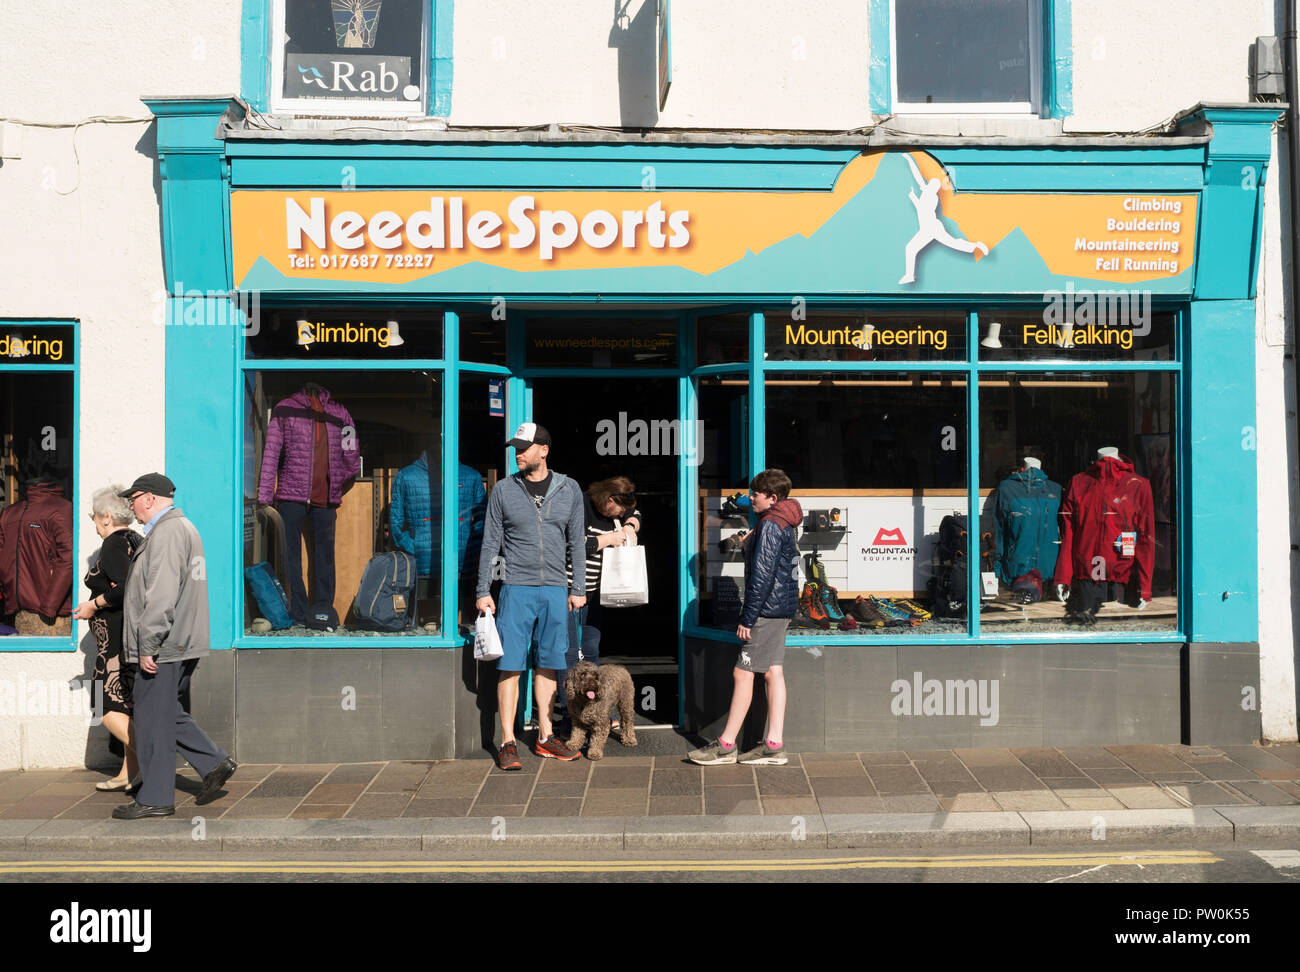 People outside Needle sports shop front in Keswick, Cumbria, England, UK Stock Photo